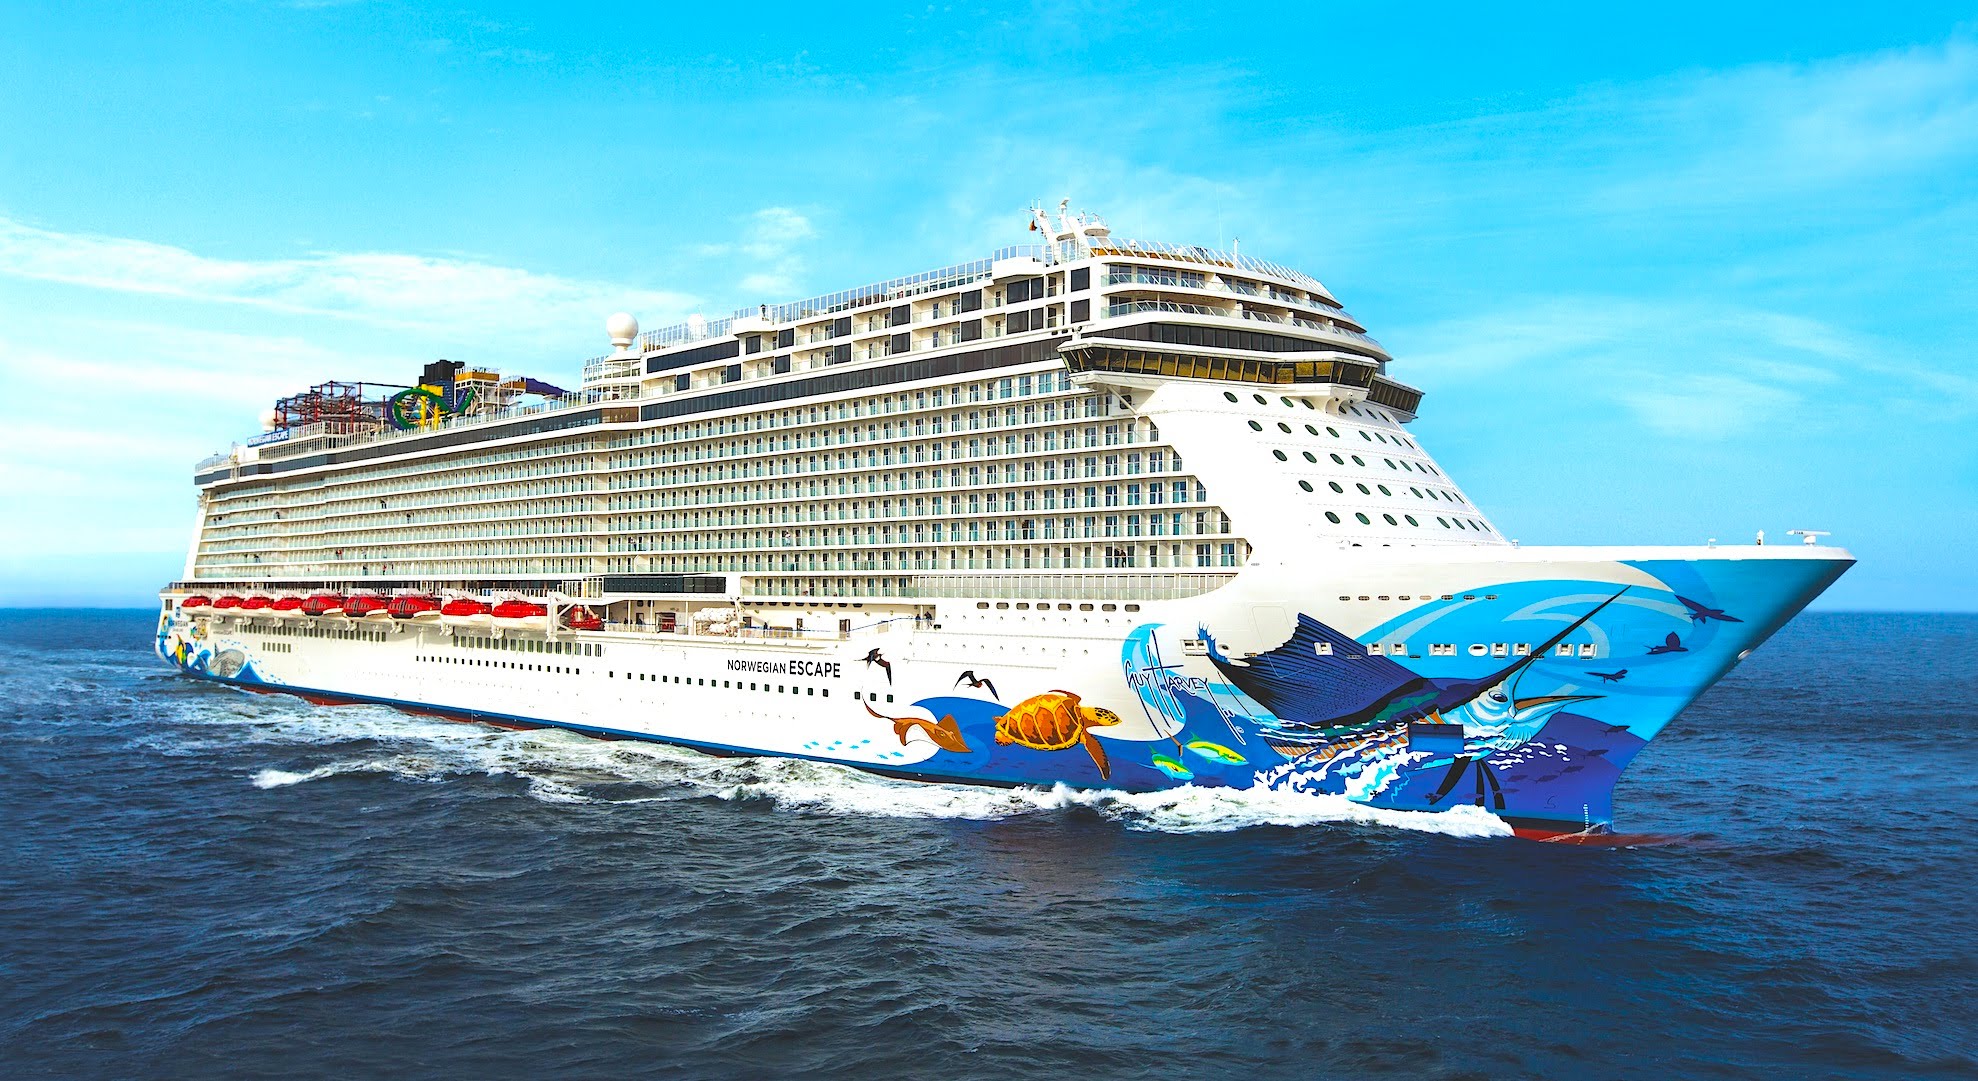 Norwegian Escape TOUR & cruise ship REVIEW decks and cabins ...